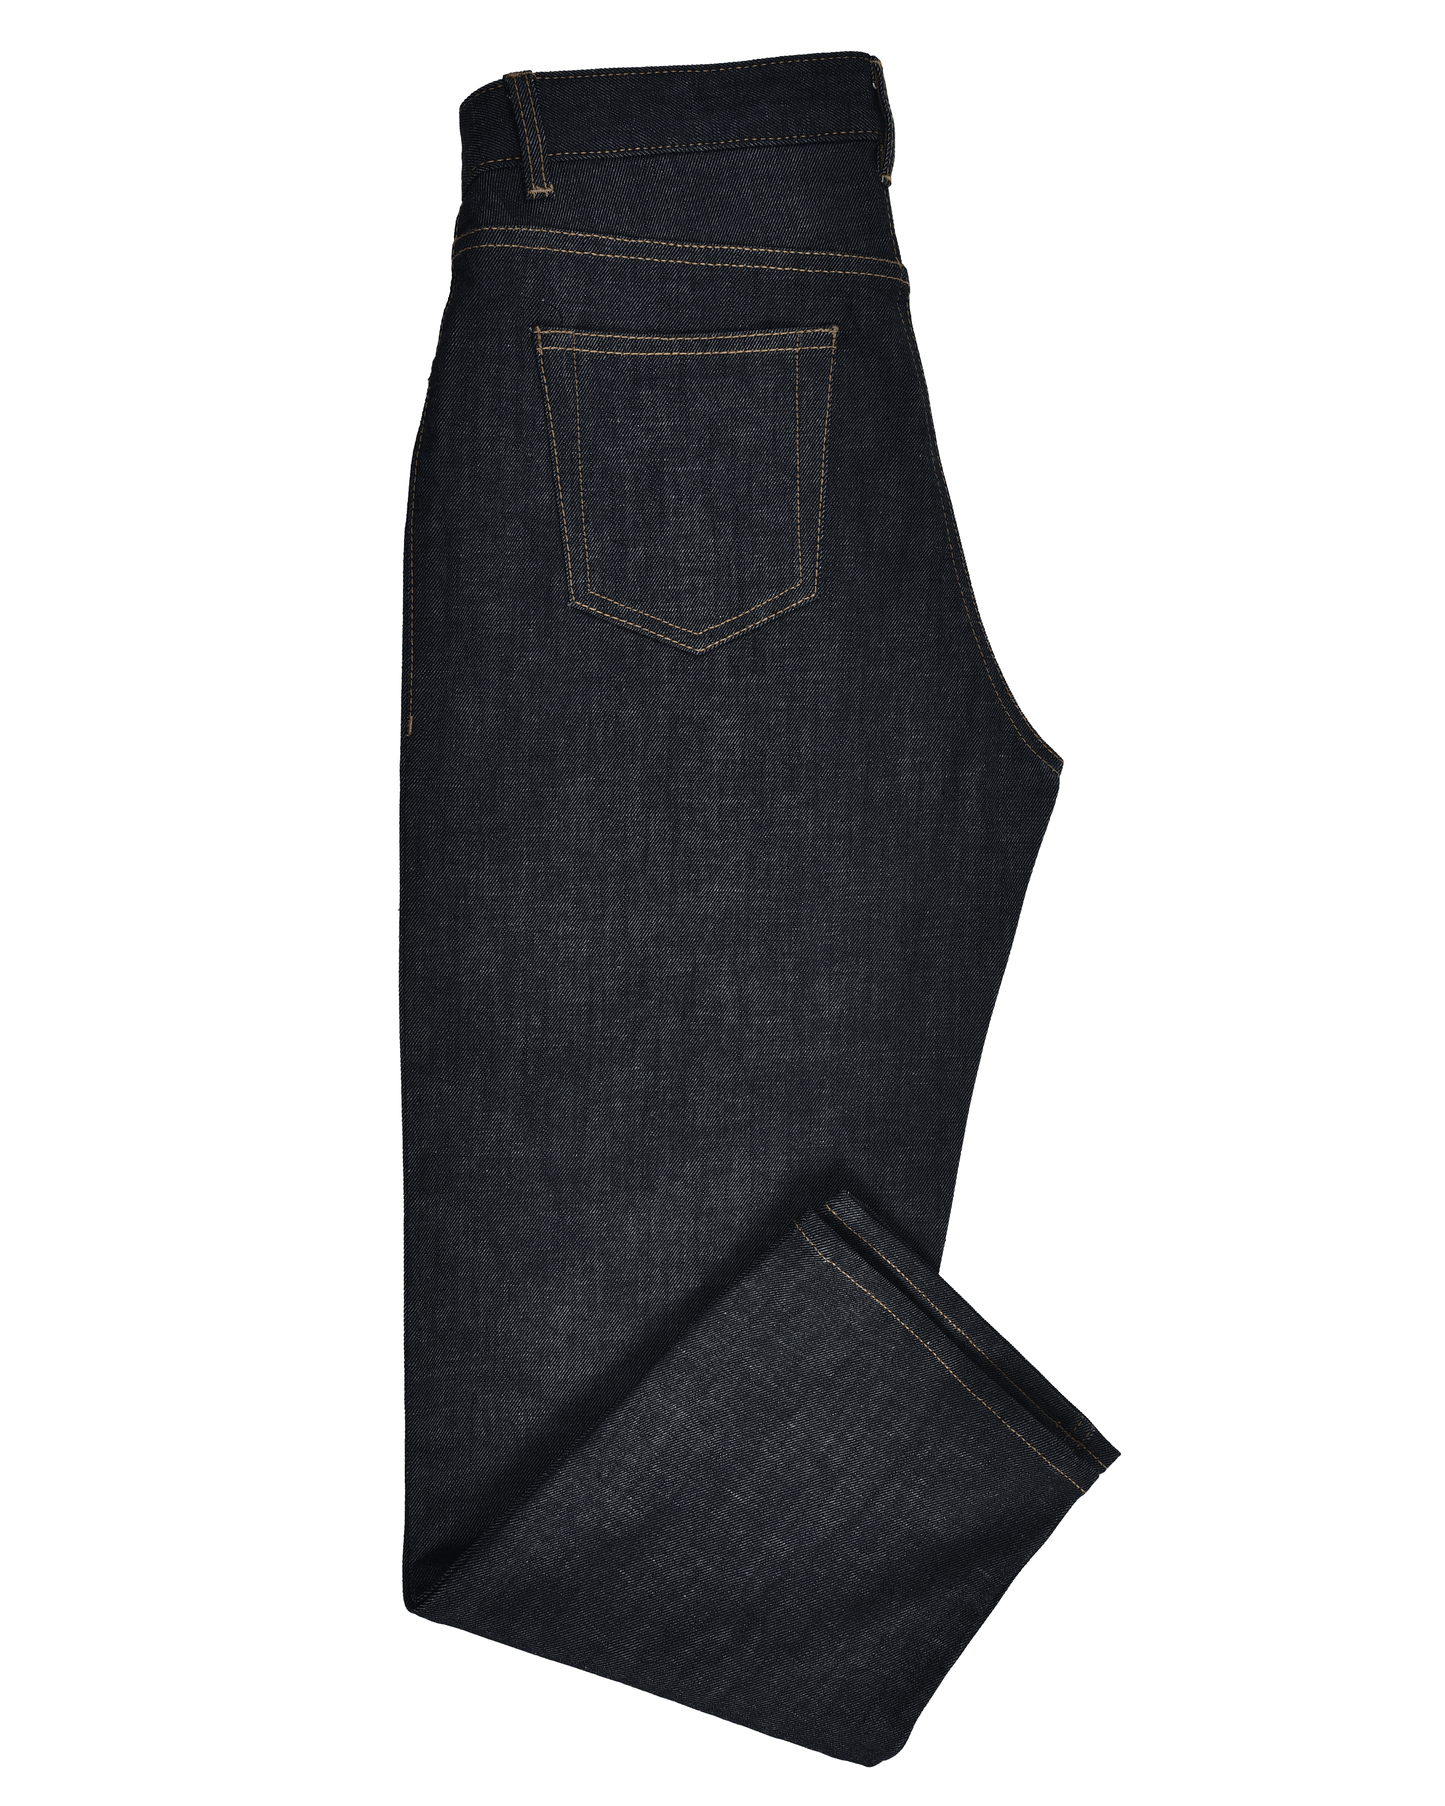 Side view of custom denim jeans for men by Luxire in dark indigo 2